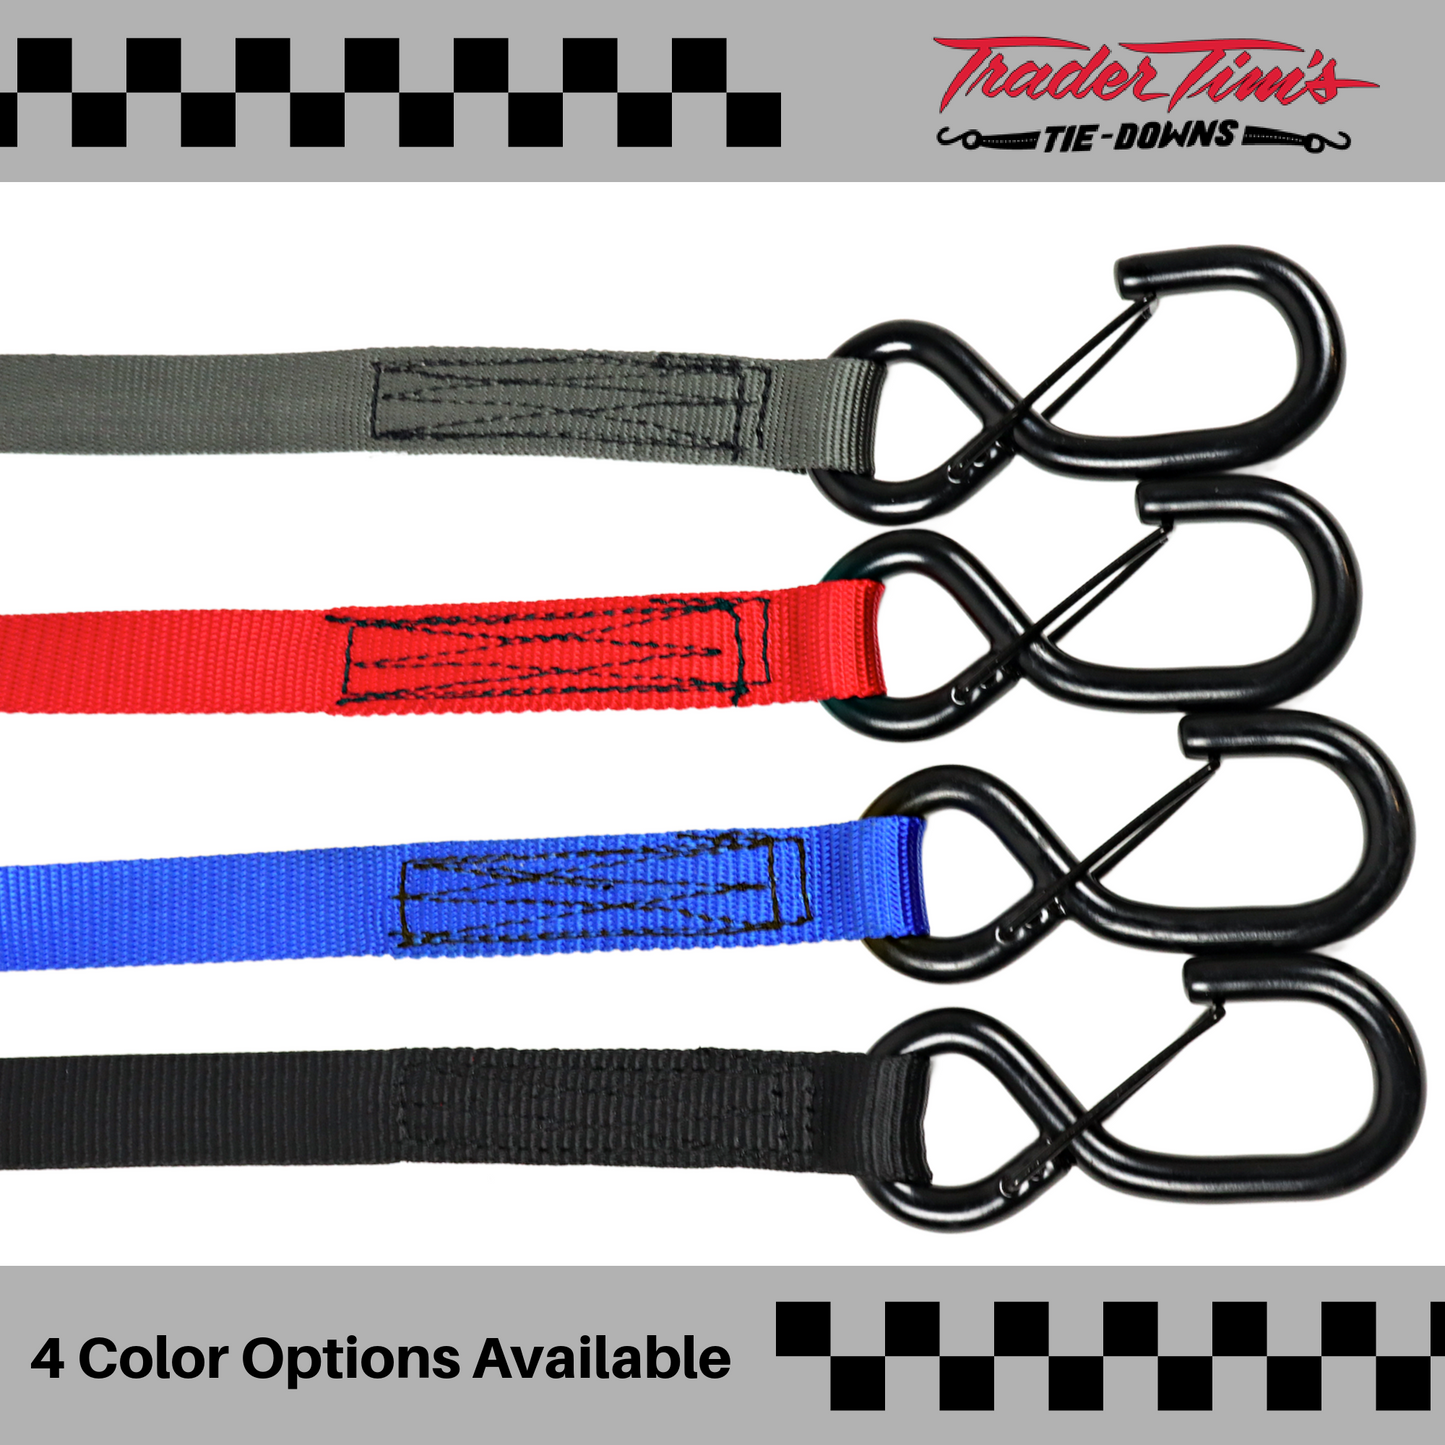 9 Piece 1" x 8' Cam-Lock Tie-Down Kit - 4 Color Options